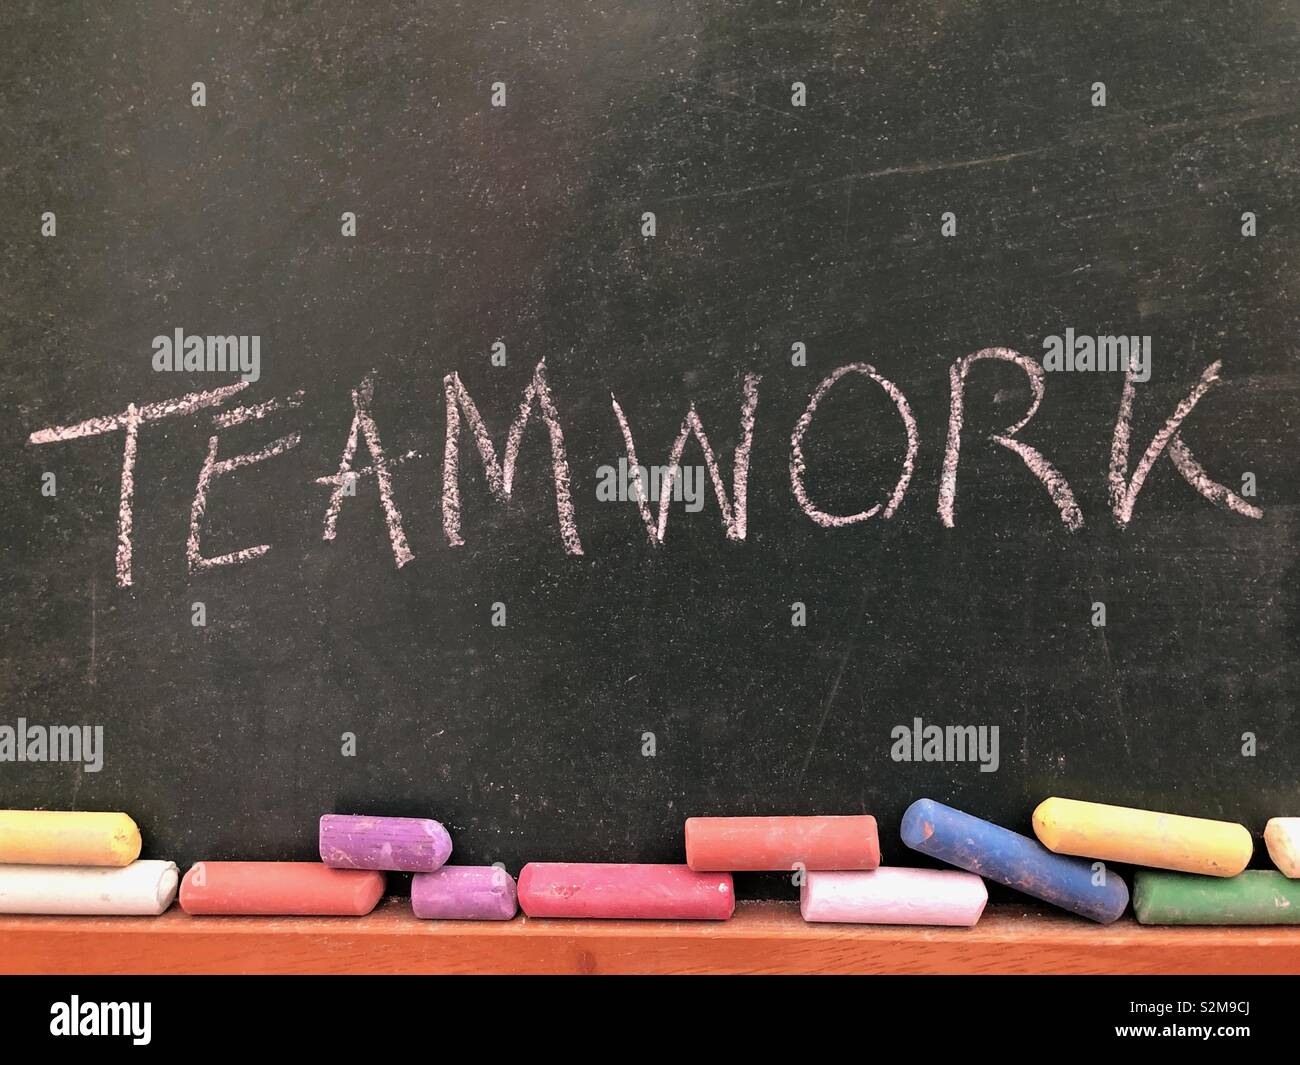 Teamwork written on a chalkboard Stock Photo